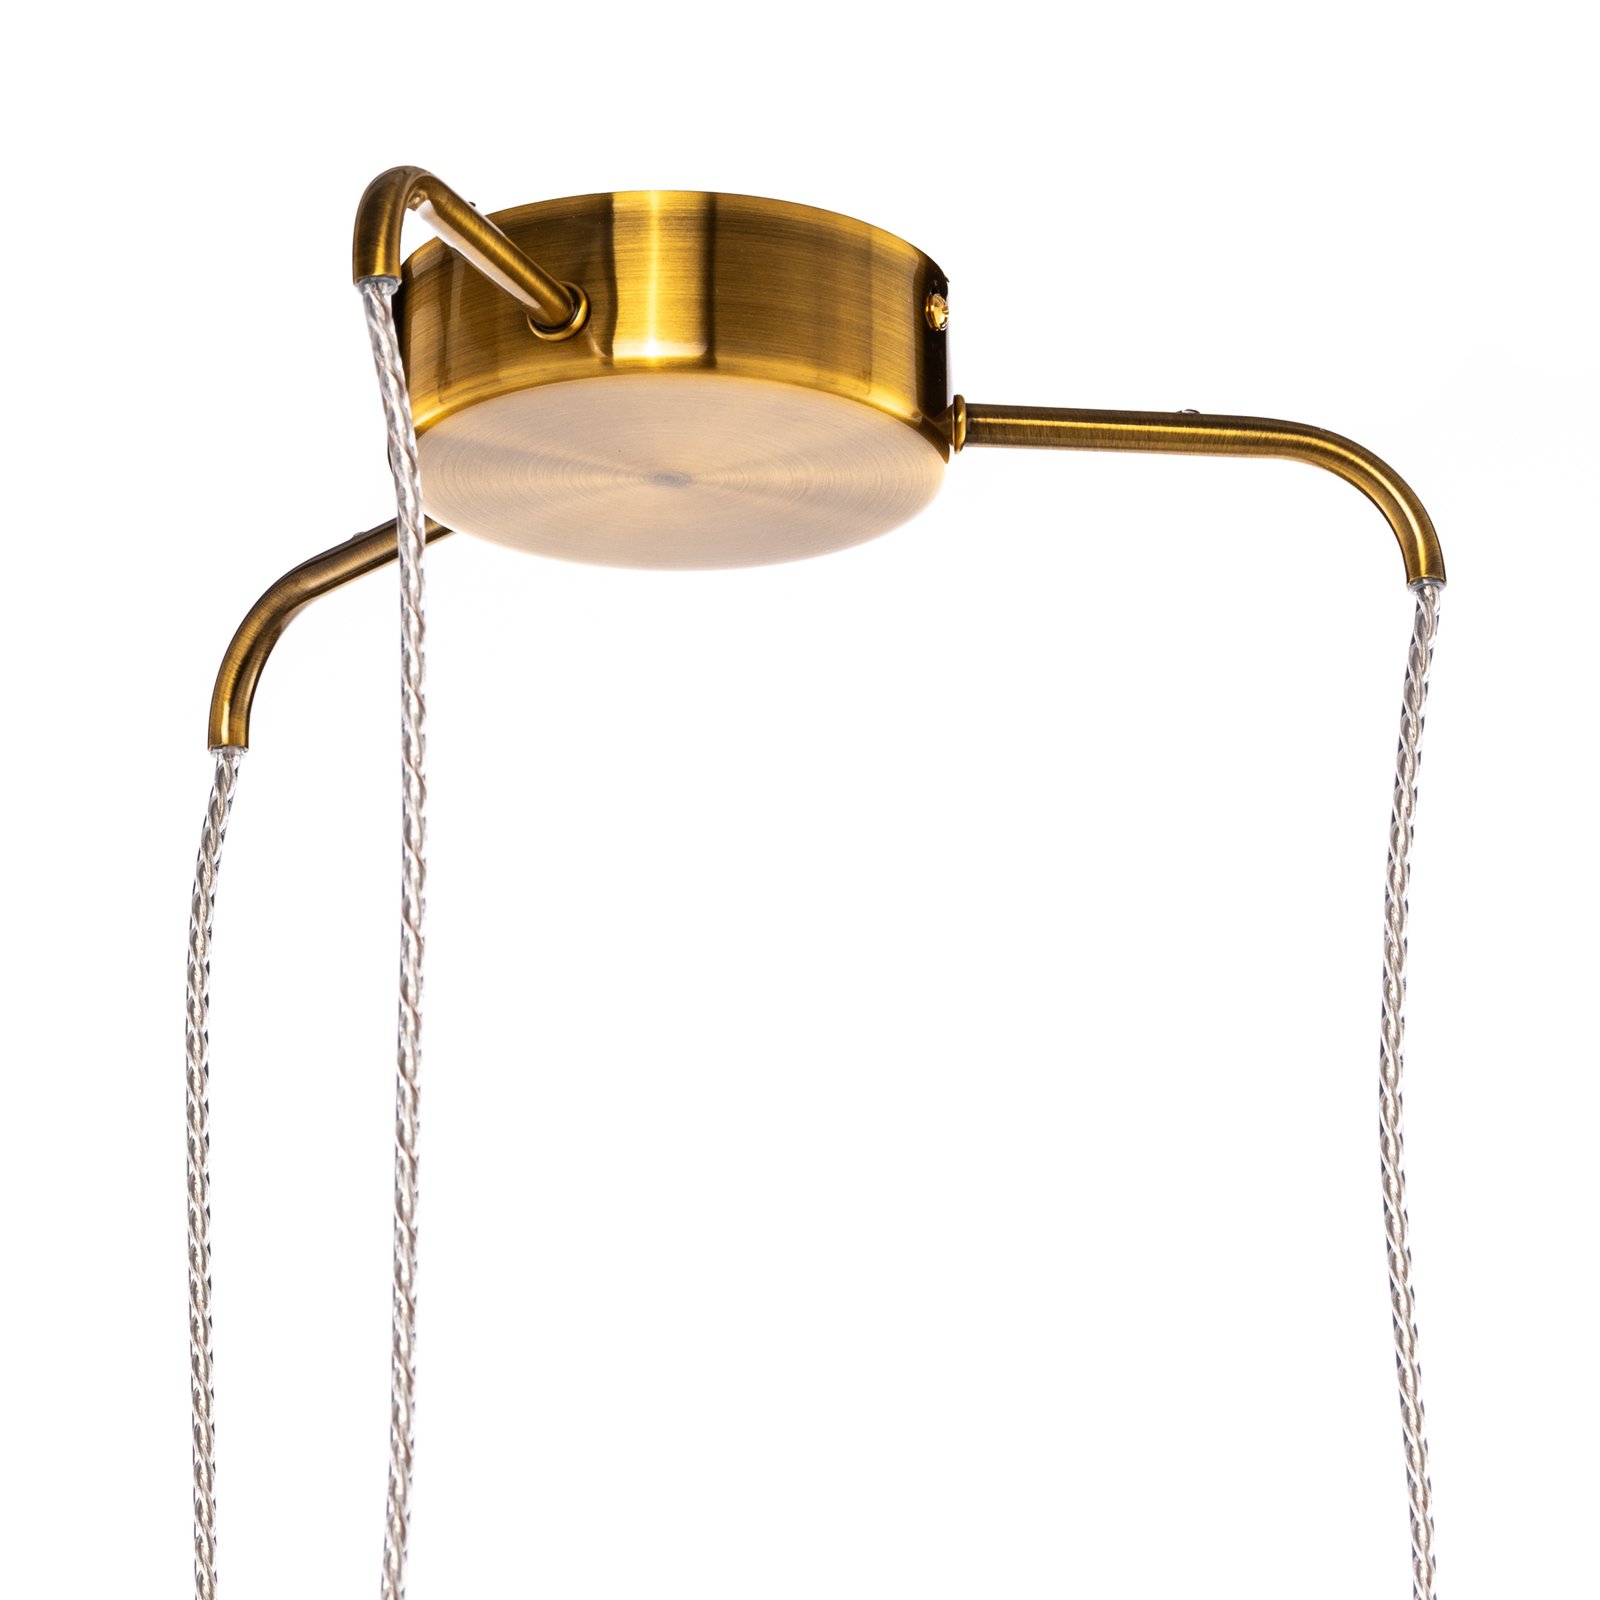 Lucande Freylin viseća svjetiljka, 3 žarulje, jantar, staklo, 38 cm